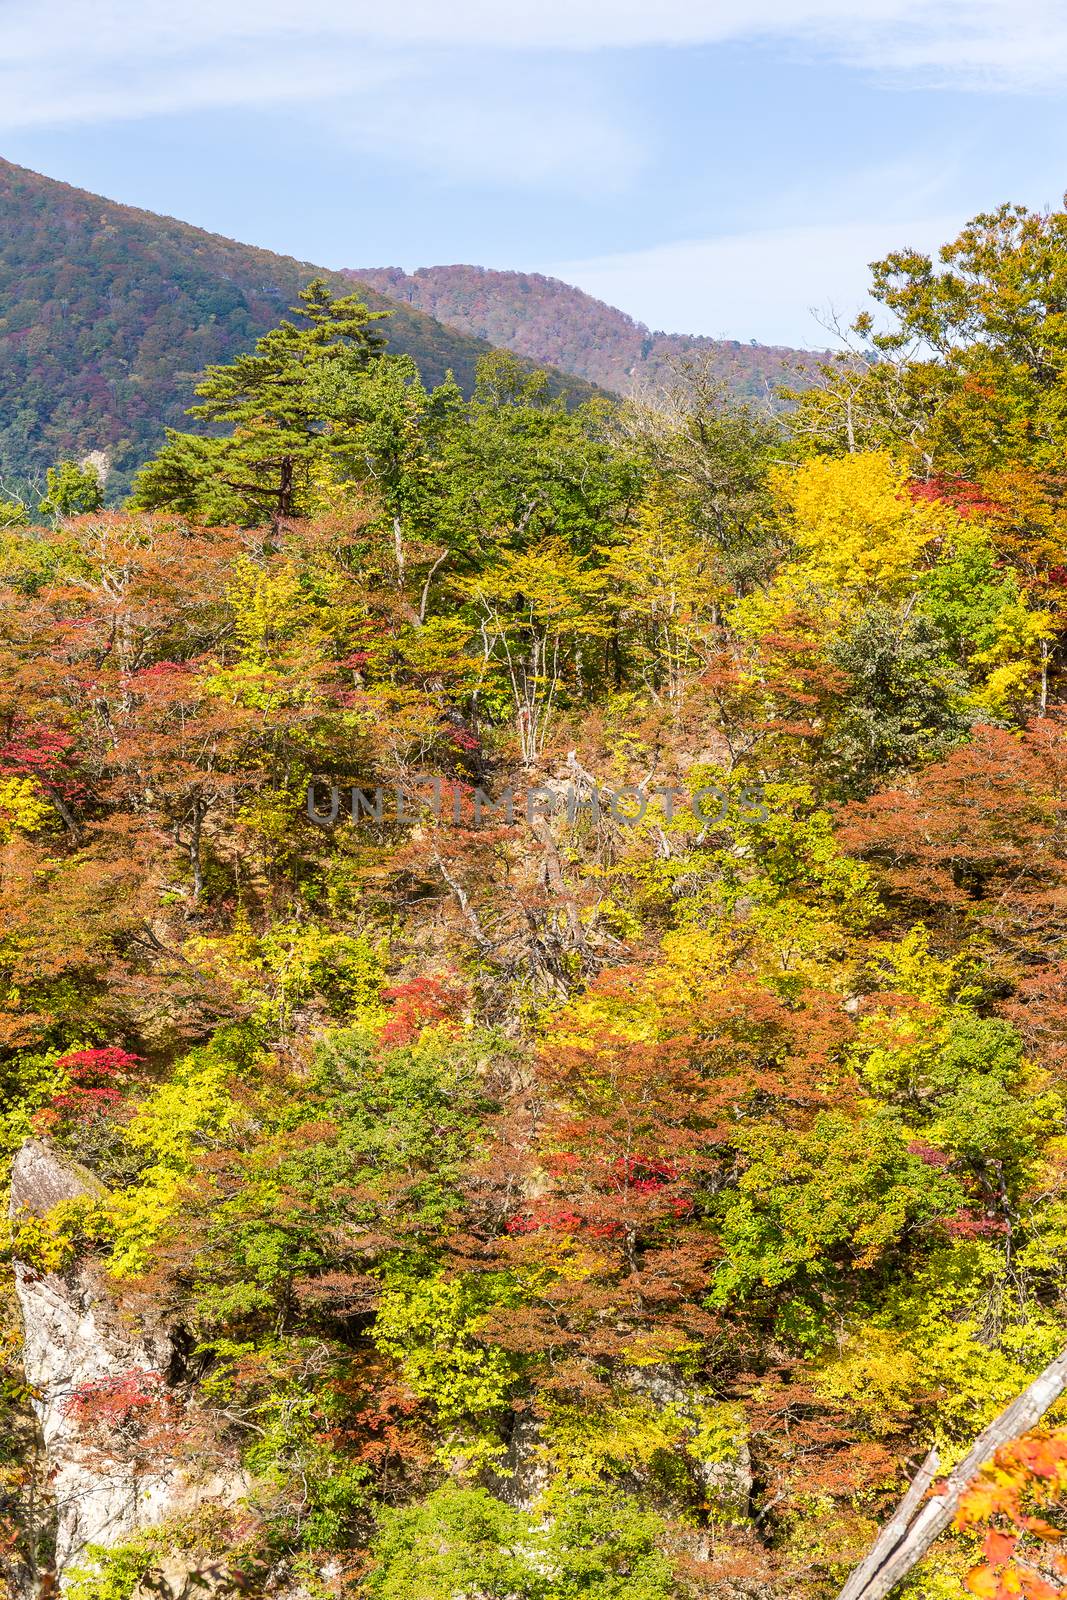 Naruko canyon with autumn foliage in Japan by leungchopan